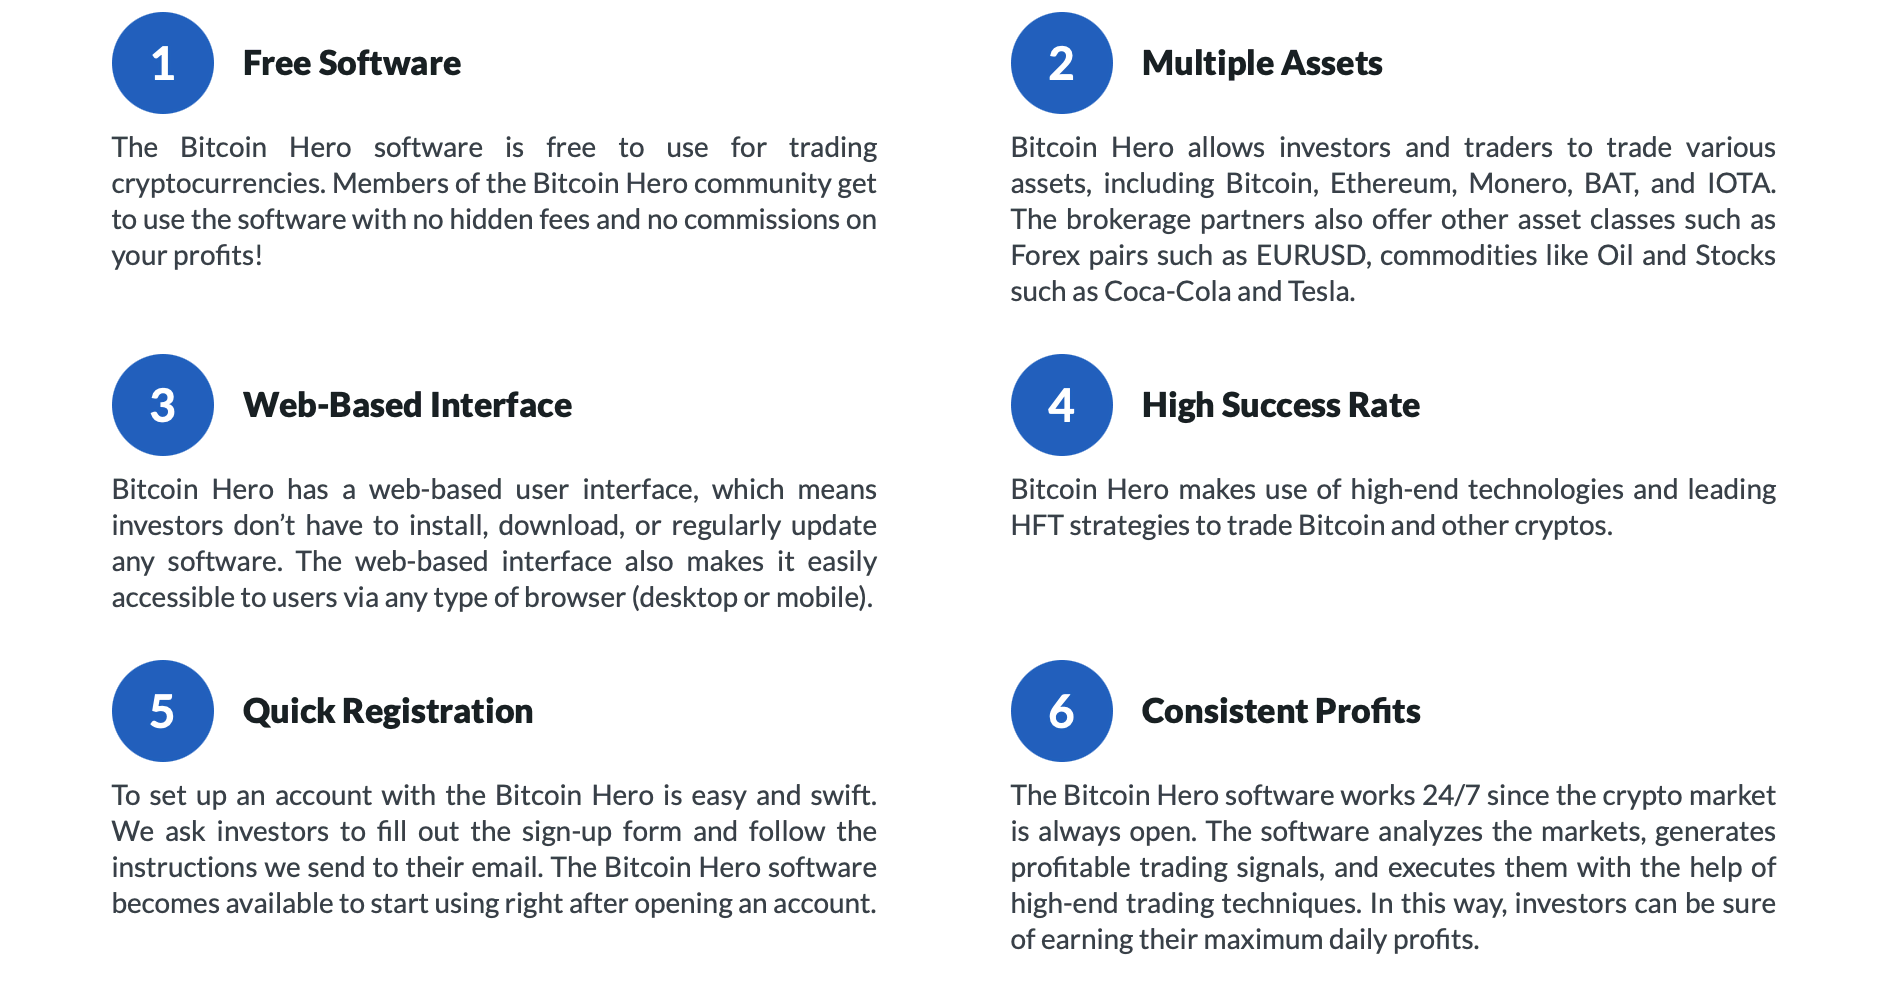 Advantages of Bitcoin Hero